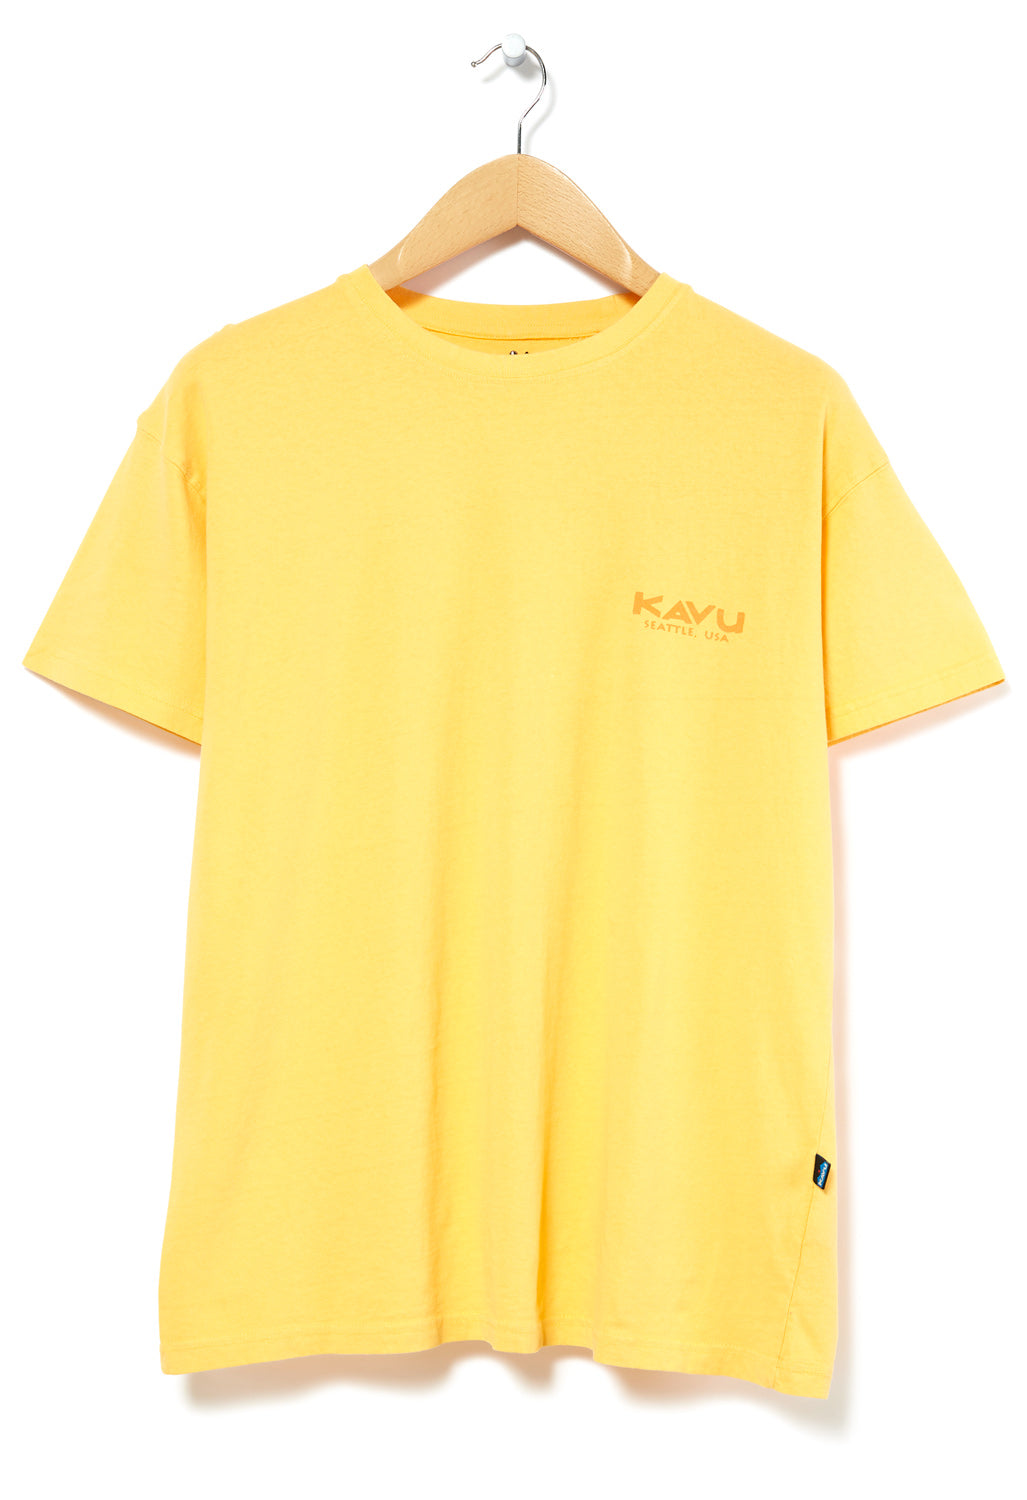 KAVU Busy Men's T-Shirt - Sunray